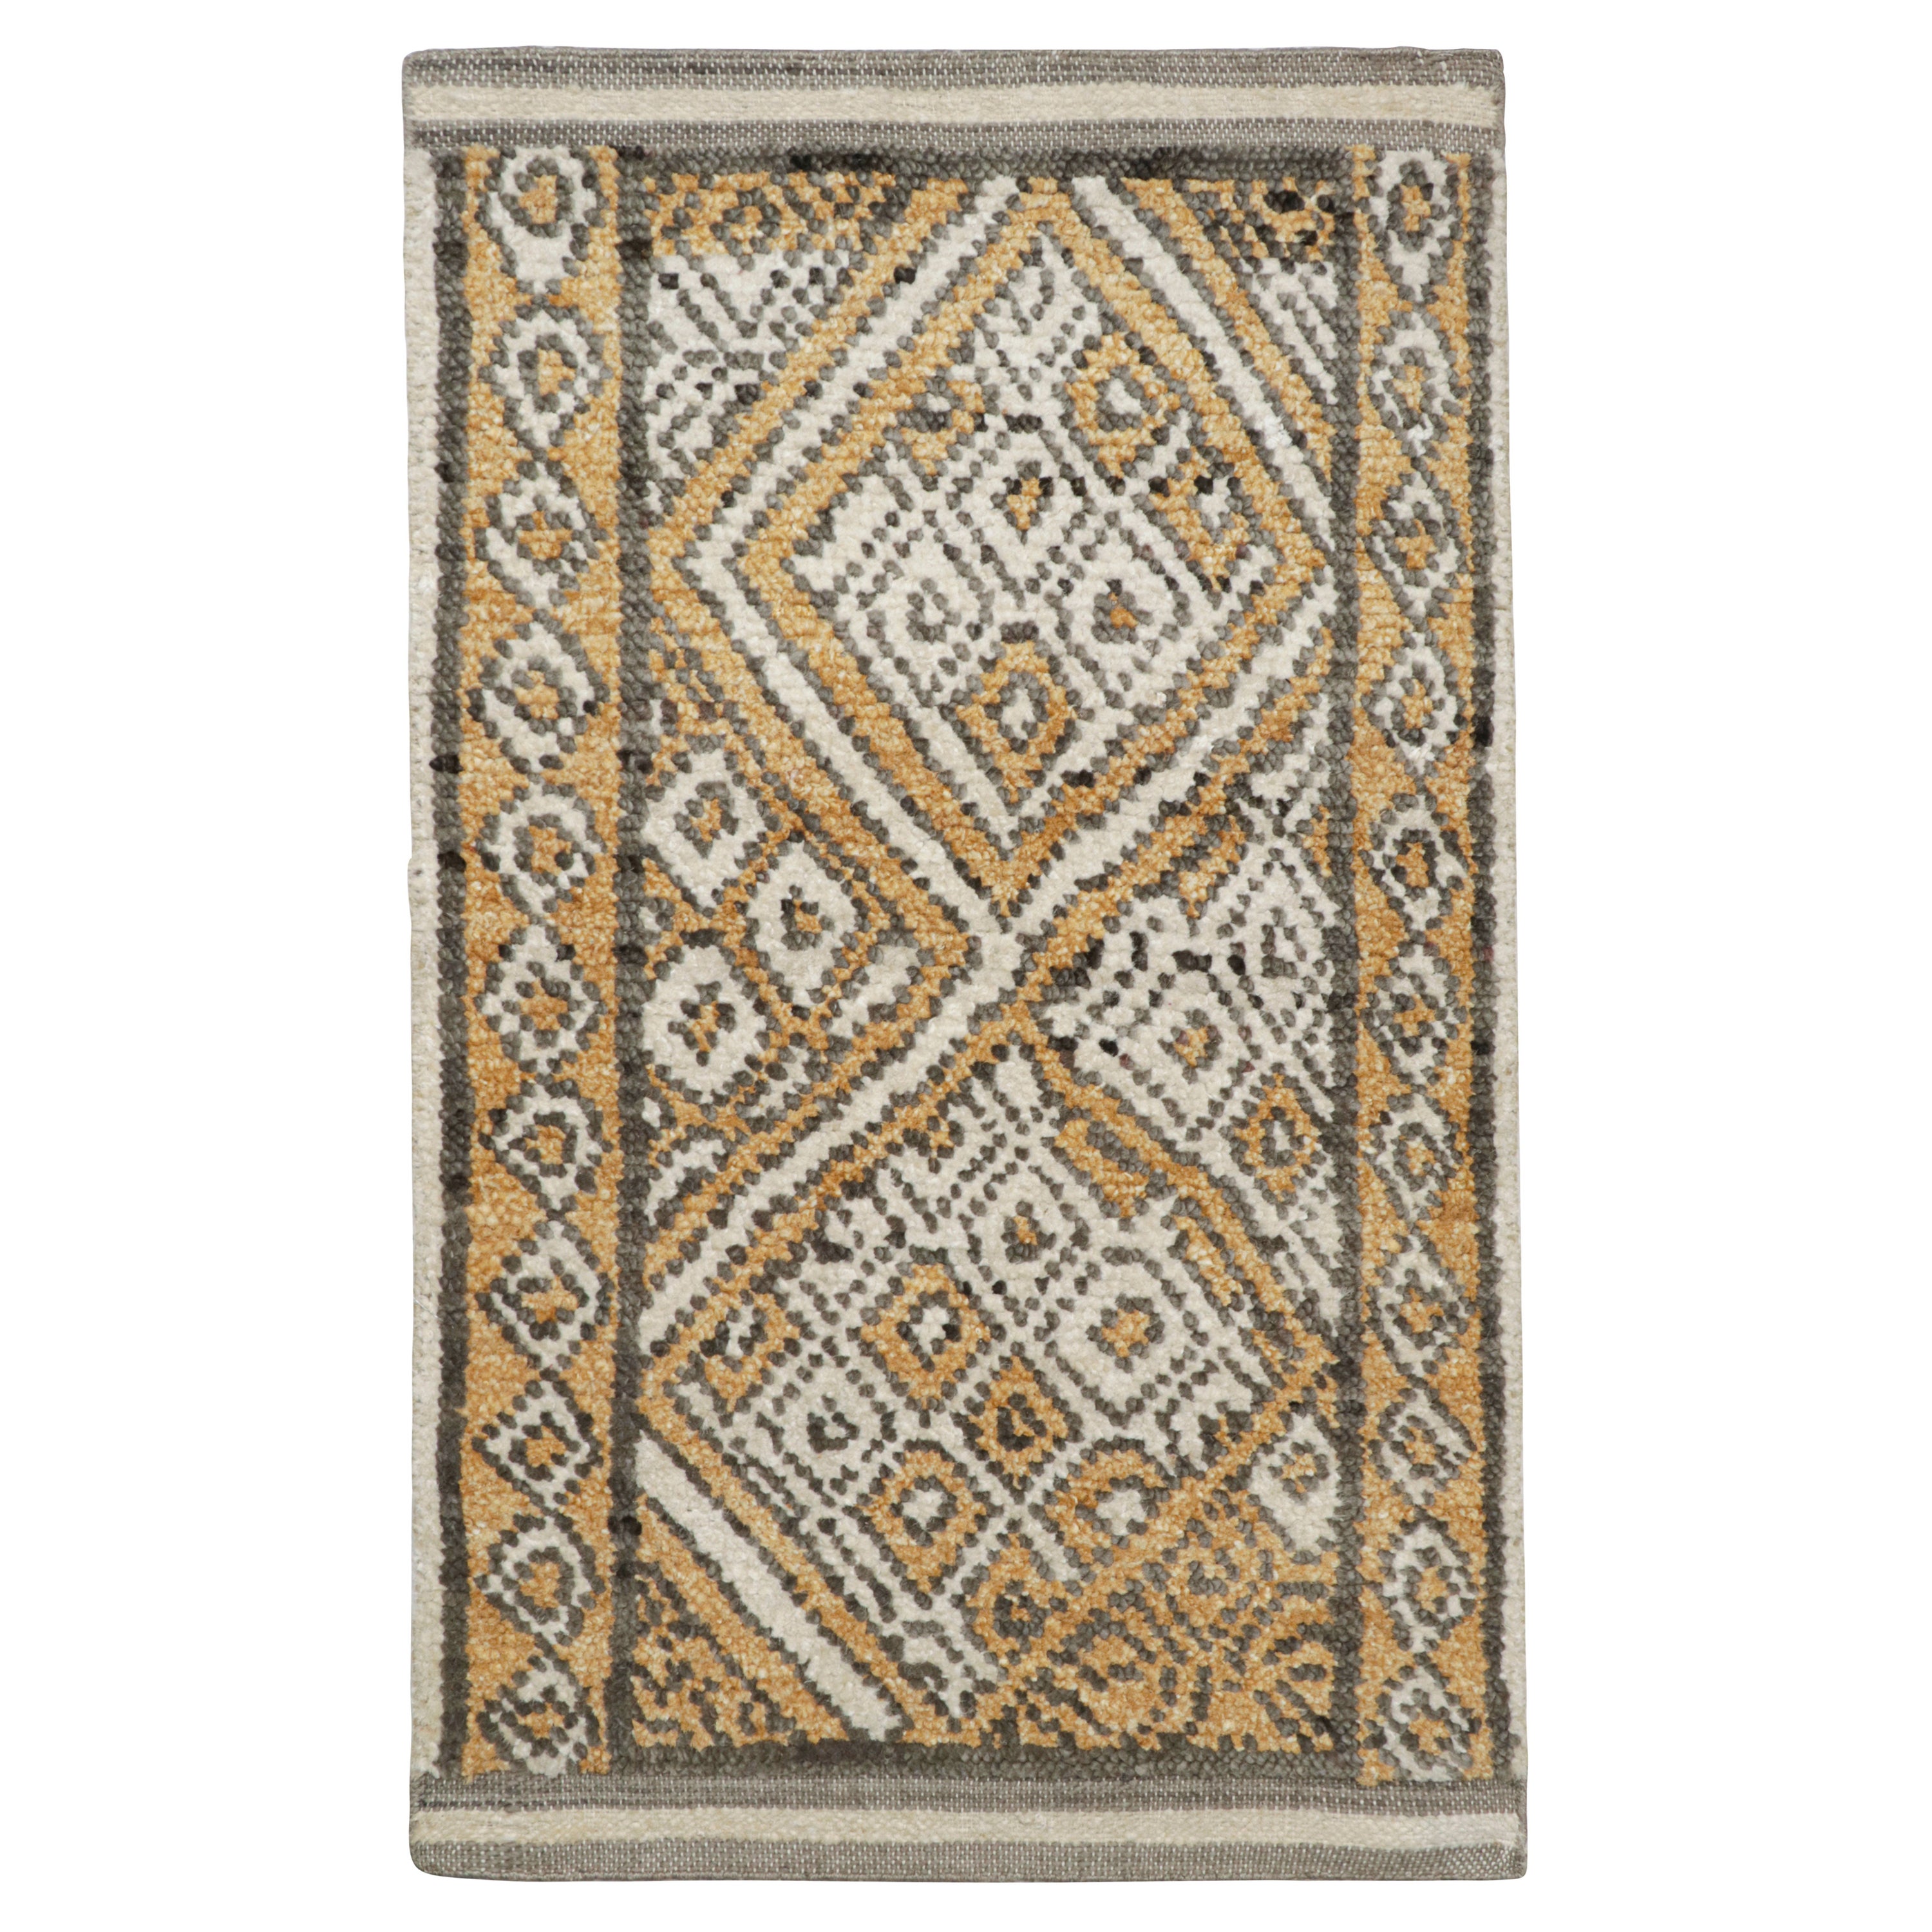 Rug & Kilim’s Moroccan Style Rug with Geometric Lozenge Diamond Patterns For Sale